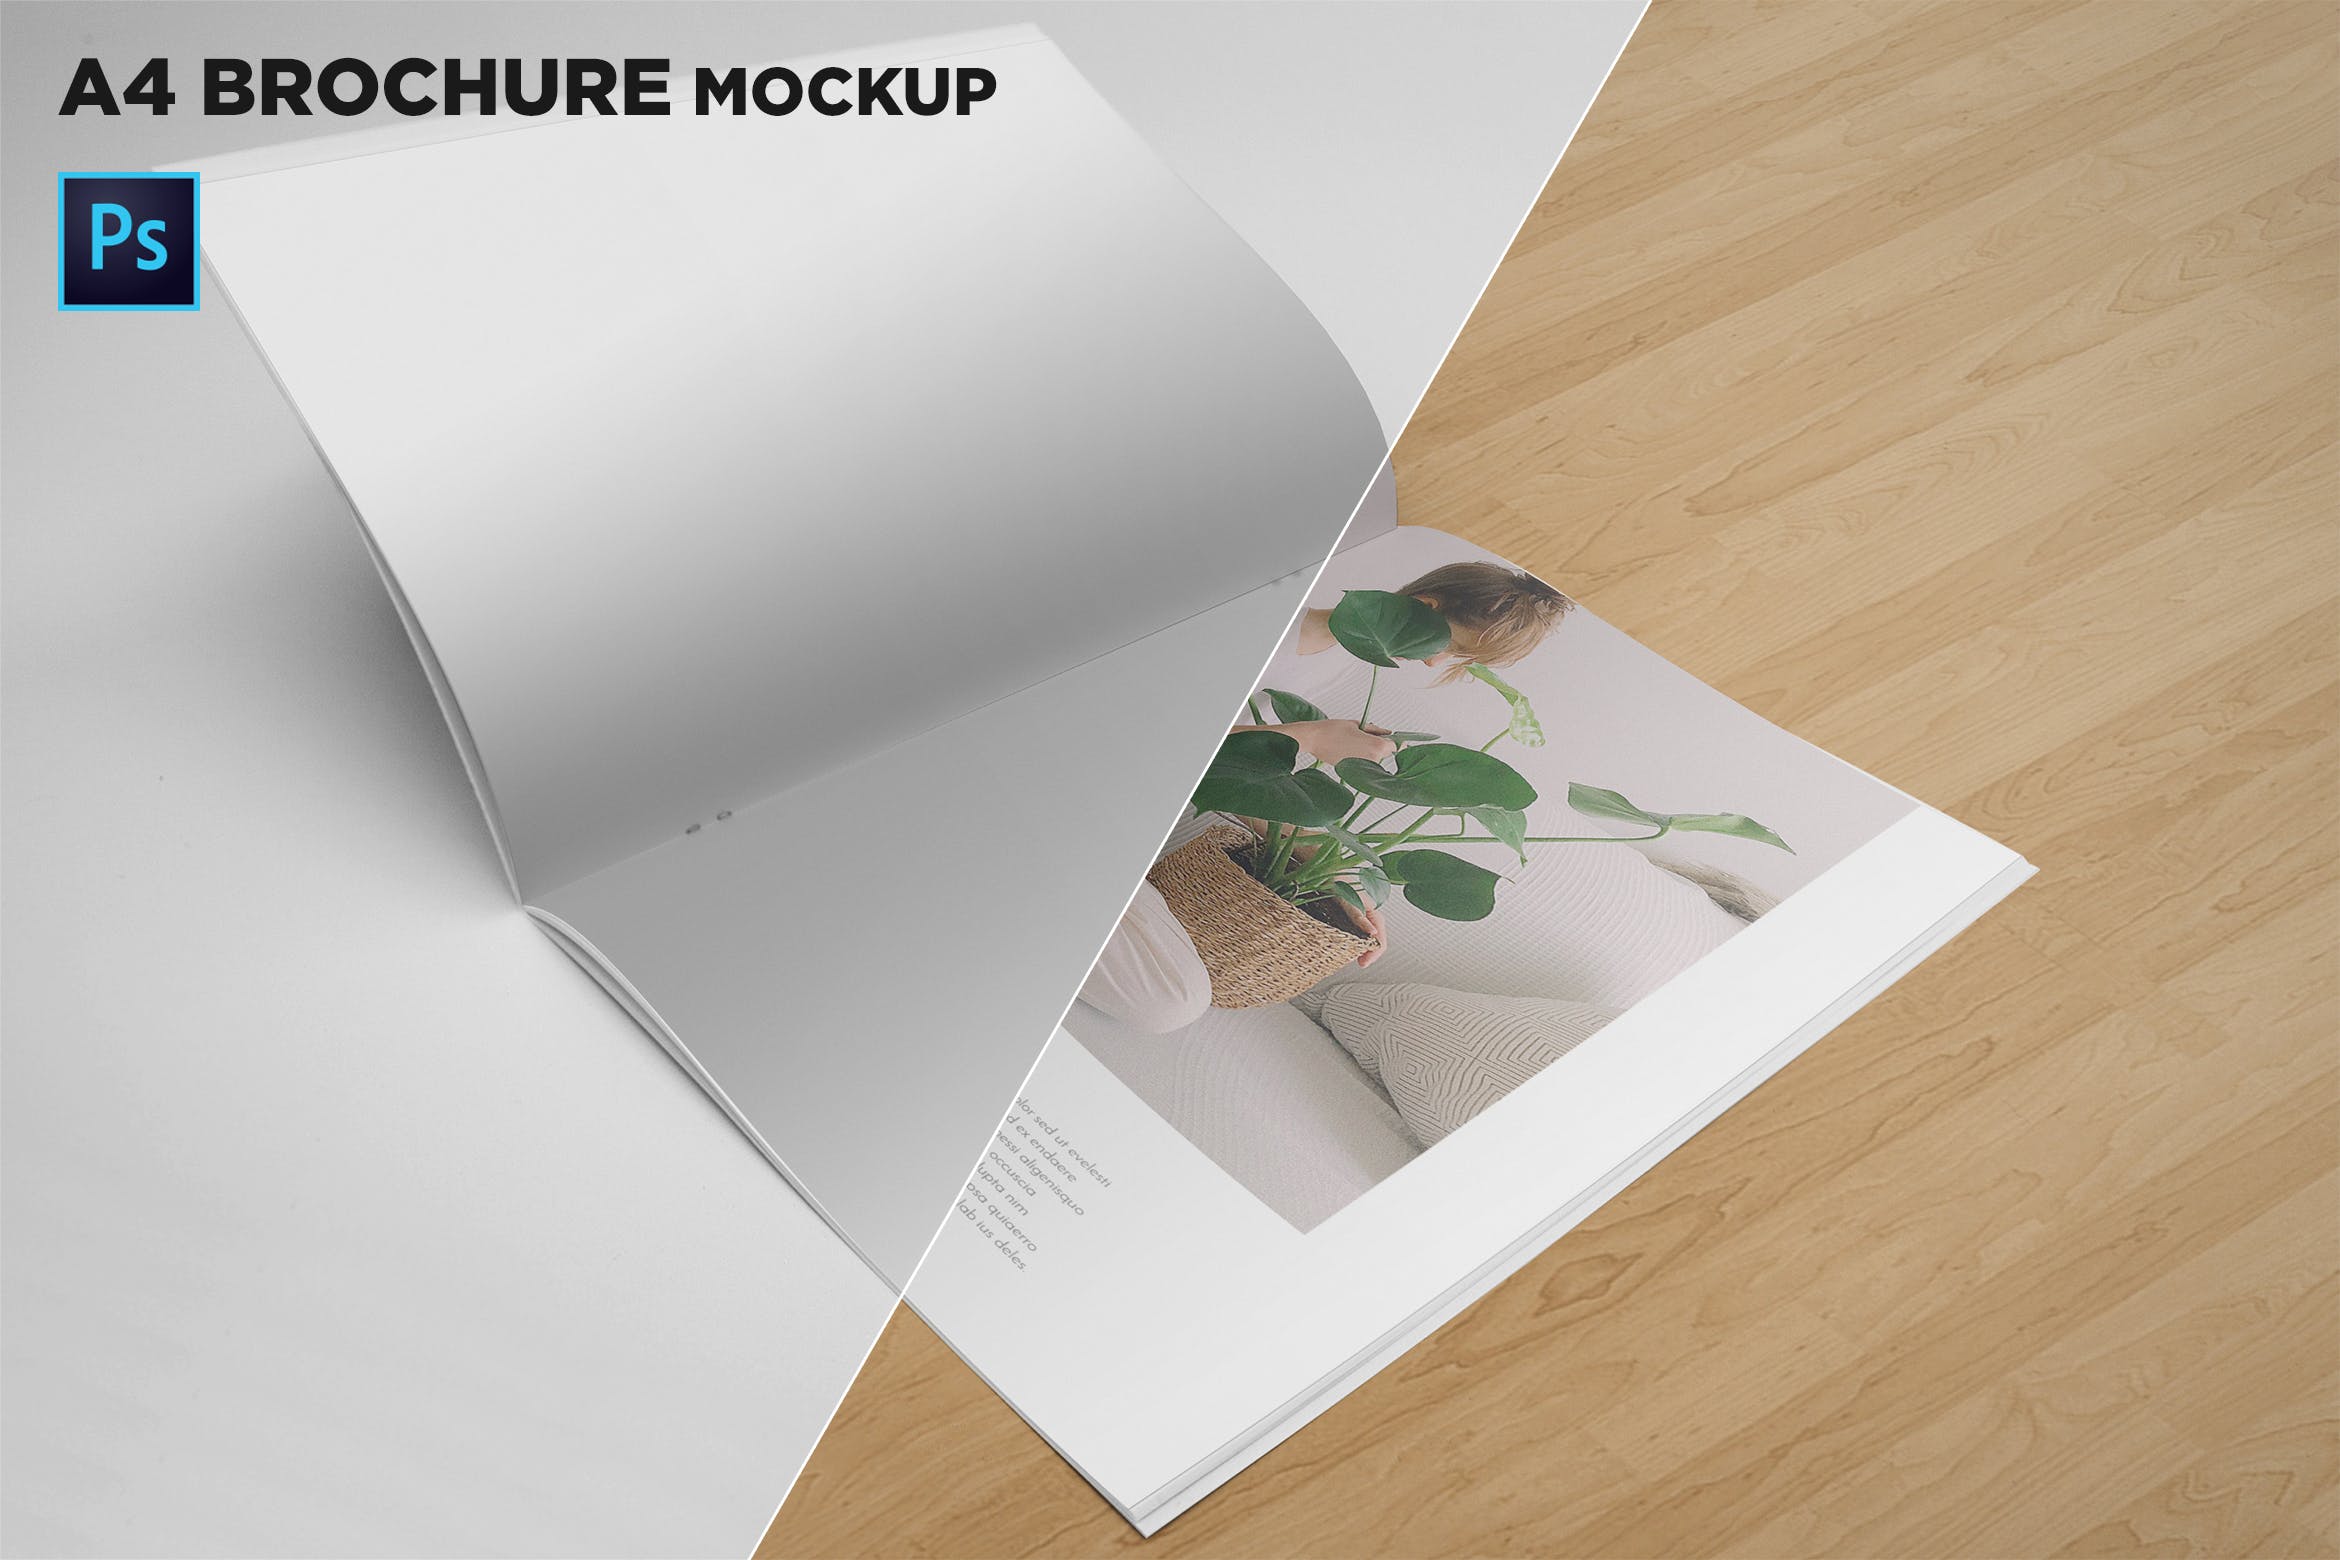 A4宣传小册子/企业画册翻页视图样机第一素材精选 A4 Brochure Mockup Open Pages插图